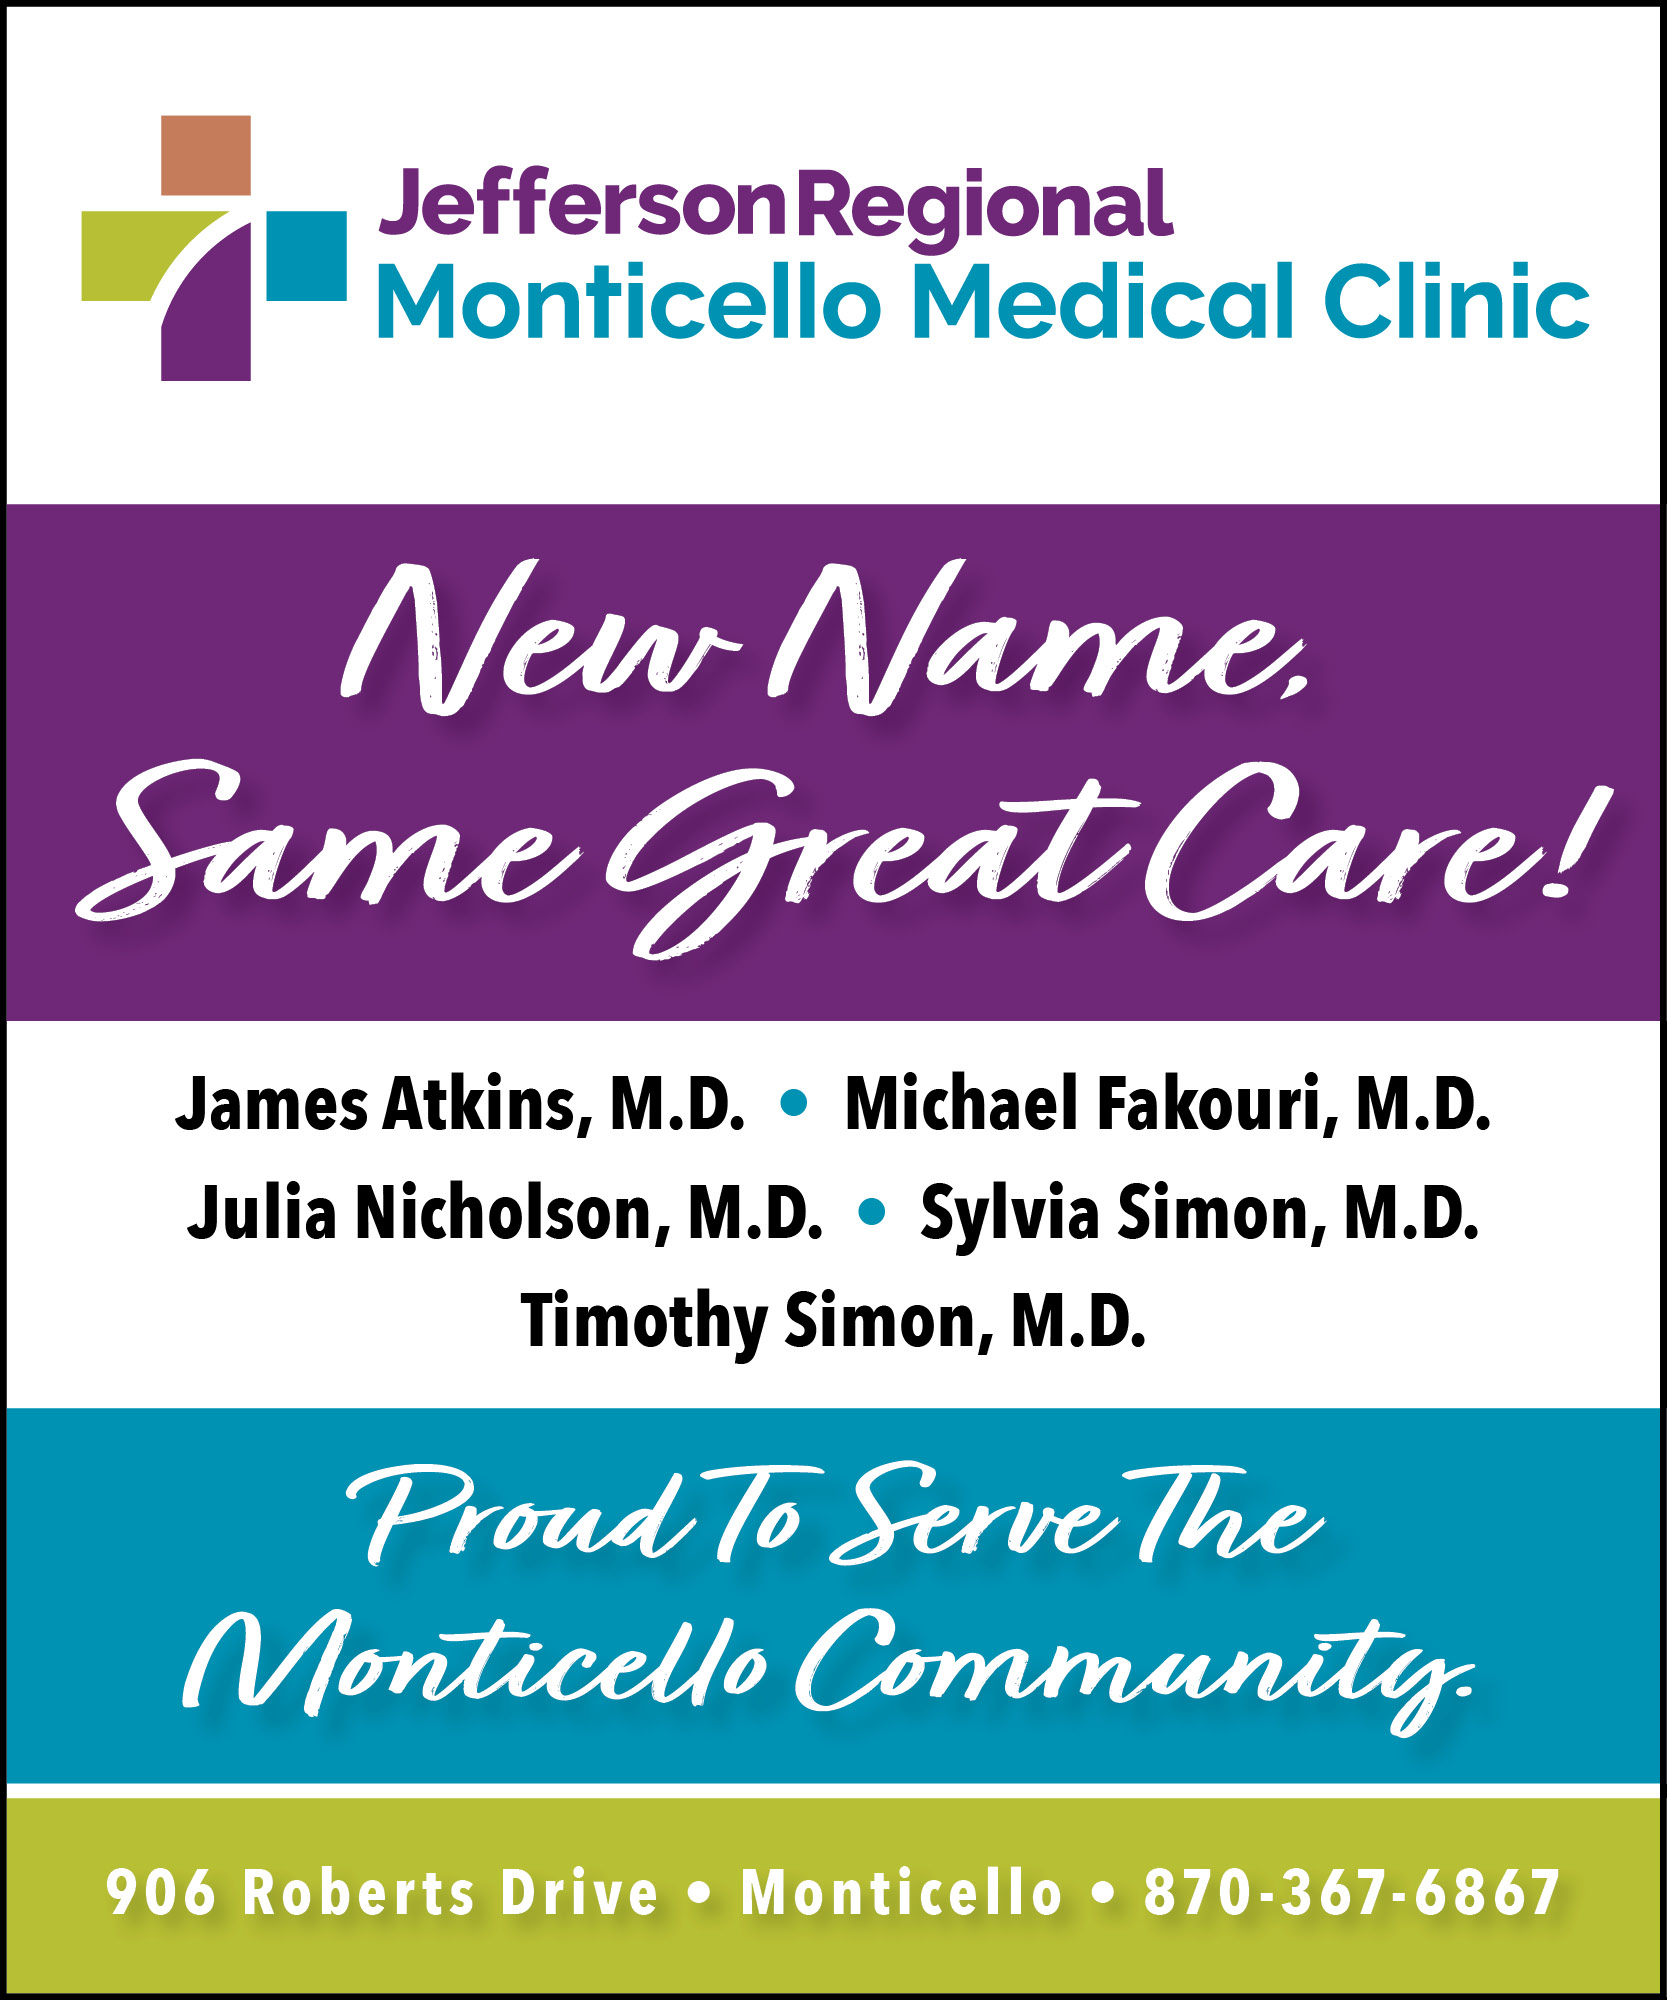 JRMC_Mon_Med_Clinic Feb 2022